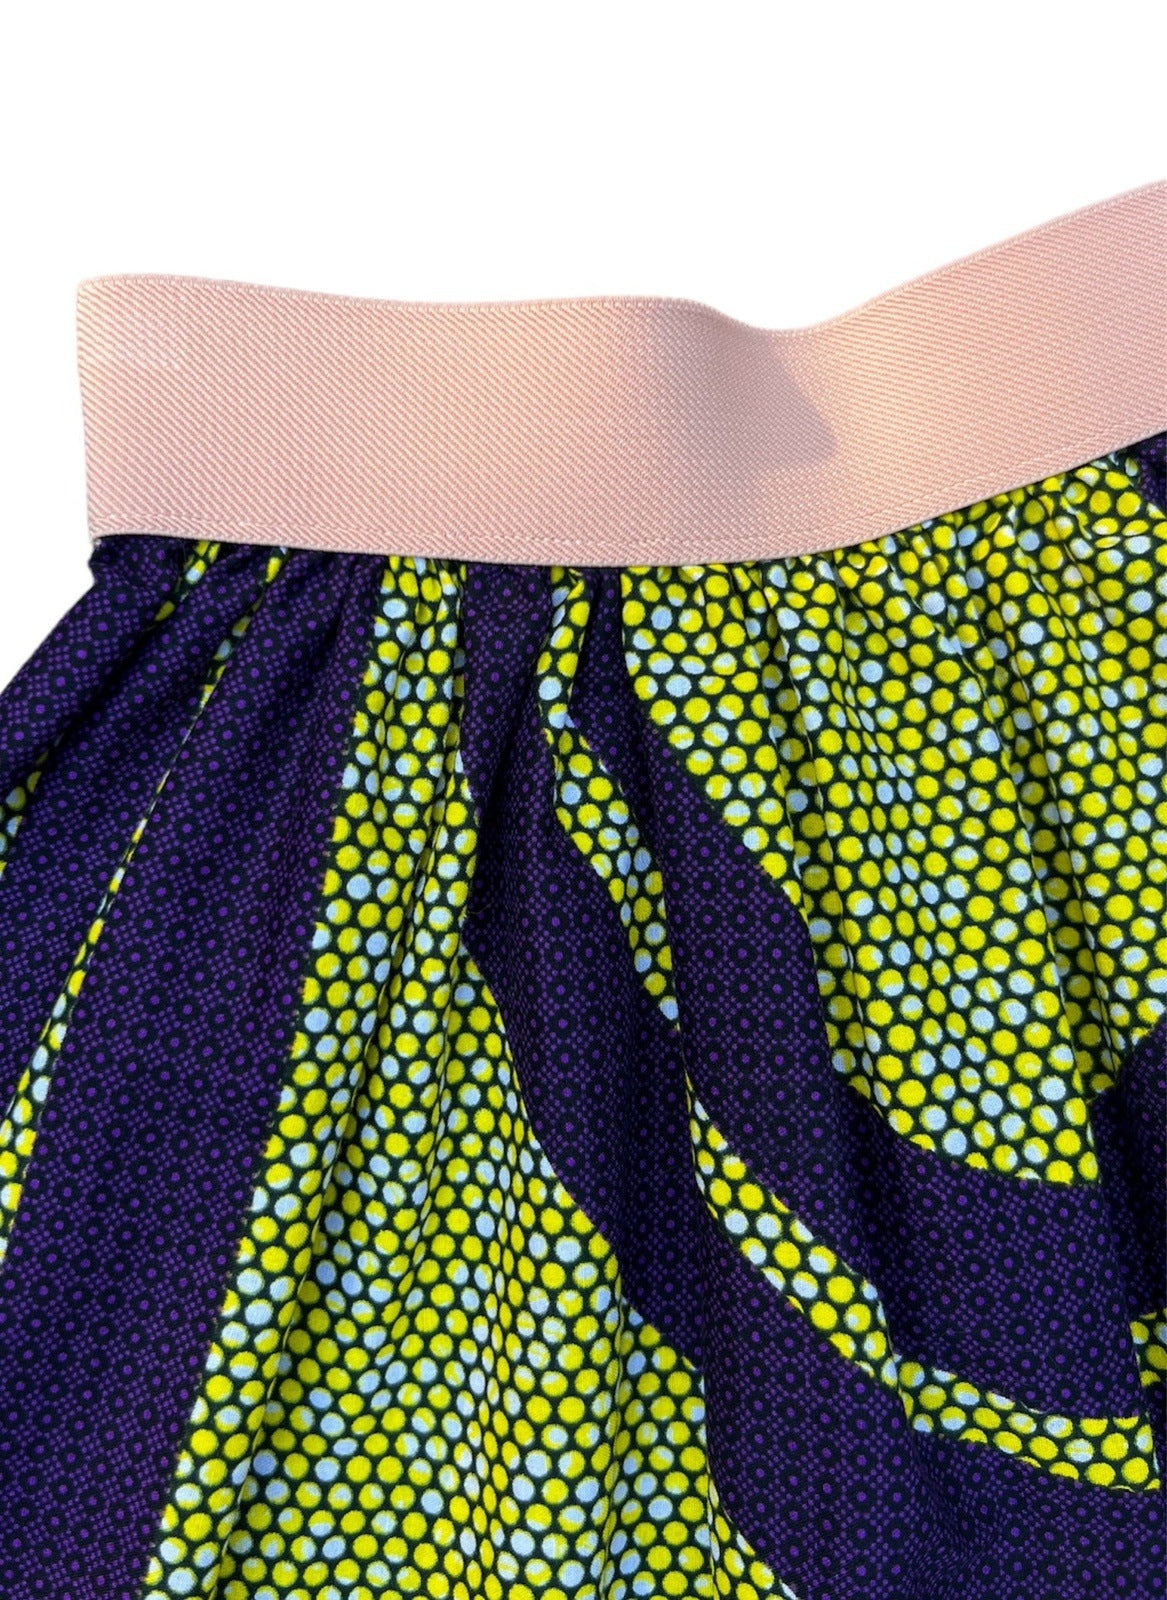 purple yellow elastic mini skirt pink belt close-up